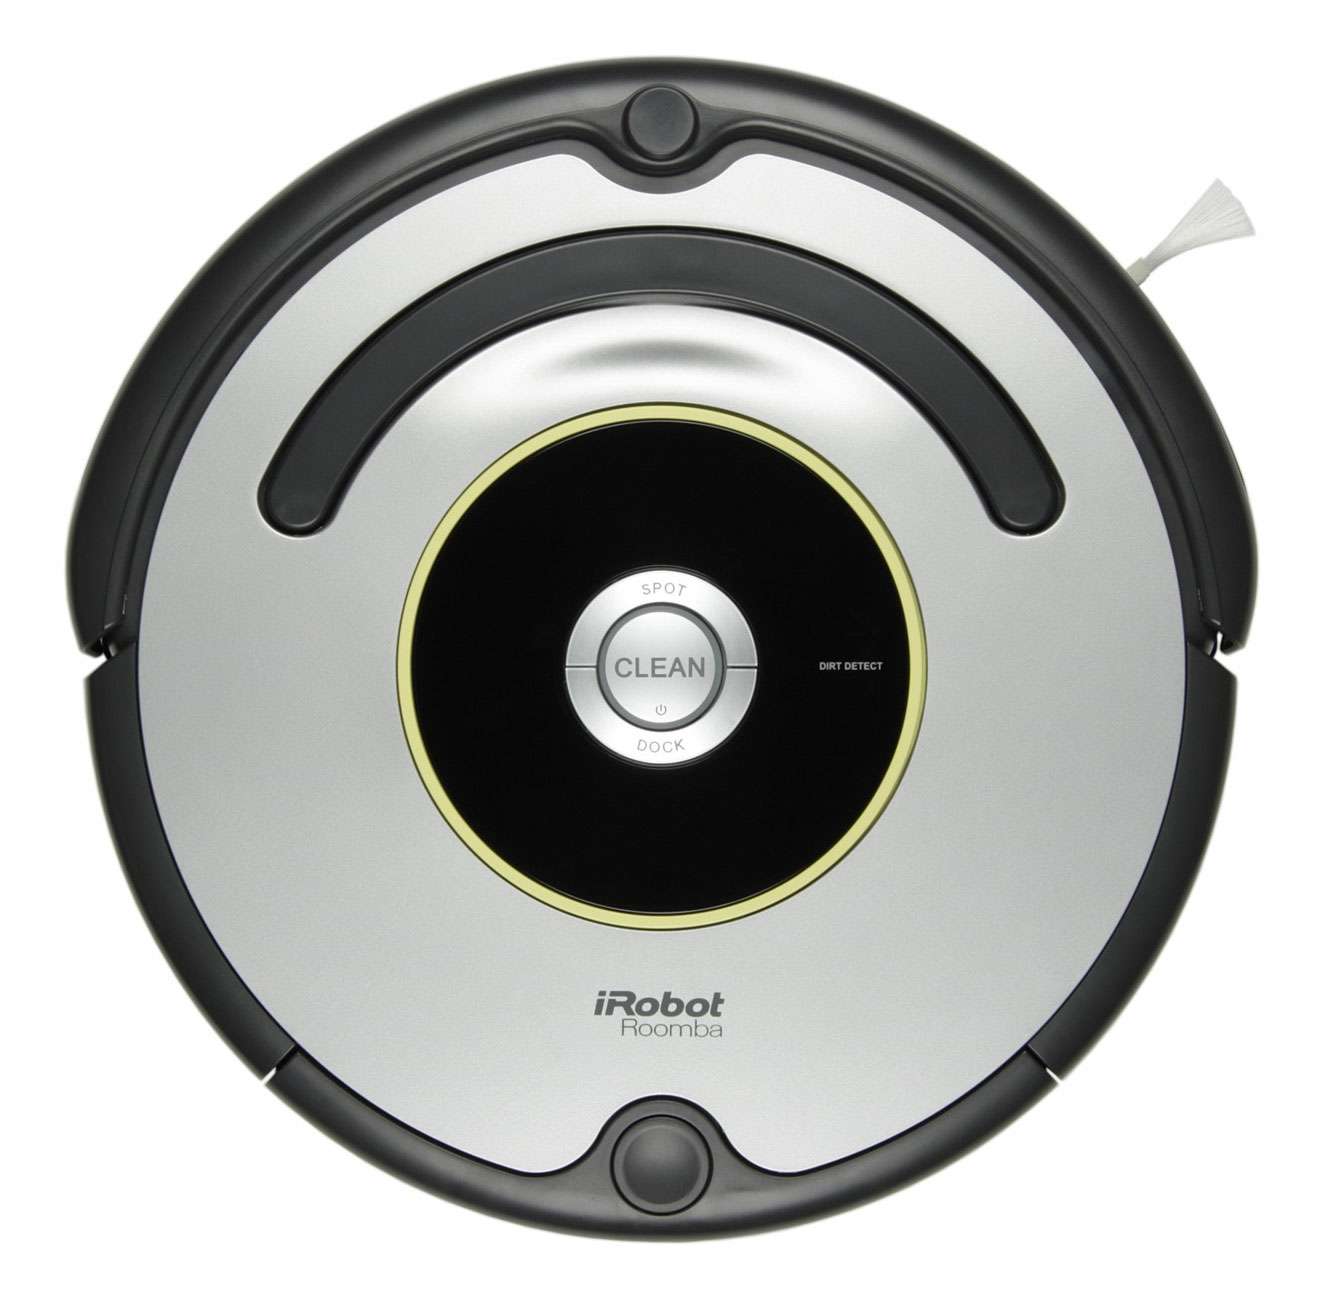 Domestic Robots - Roomba iRobot